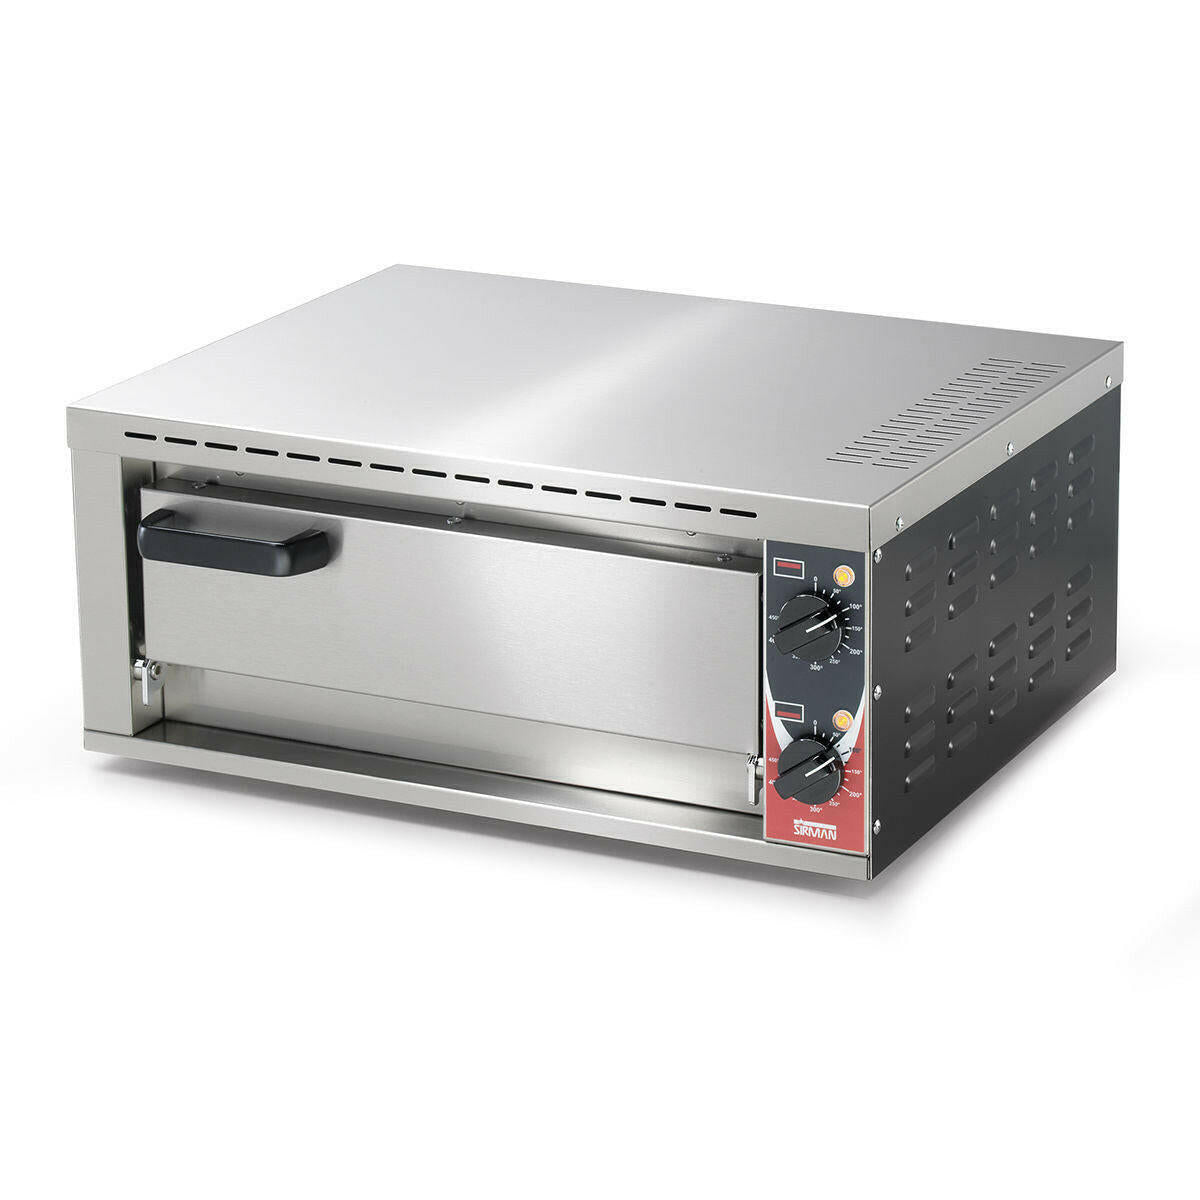 Sirman Stromboli Single Deck Pizza Oven